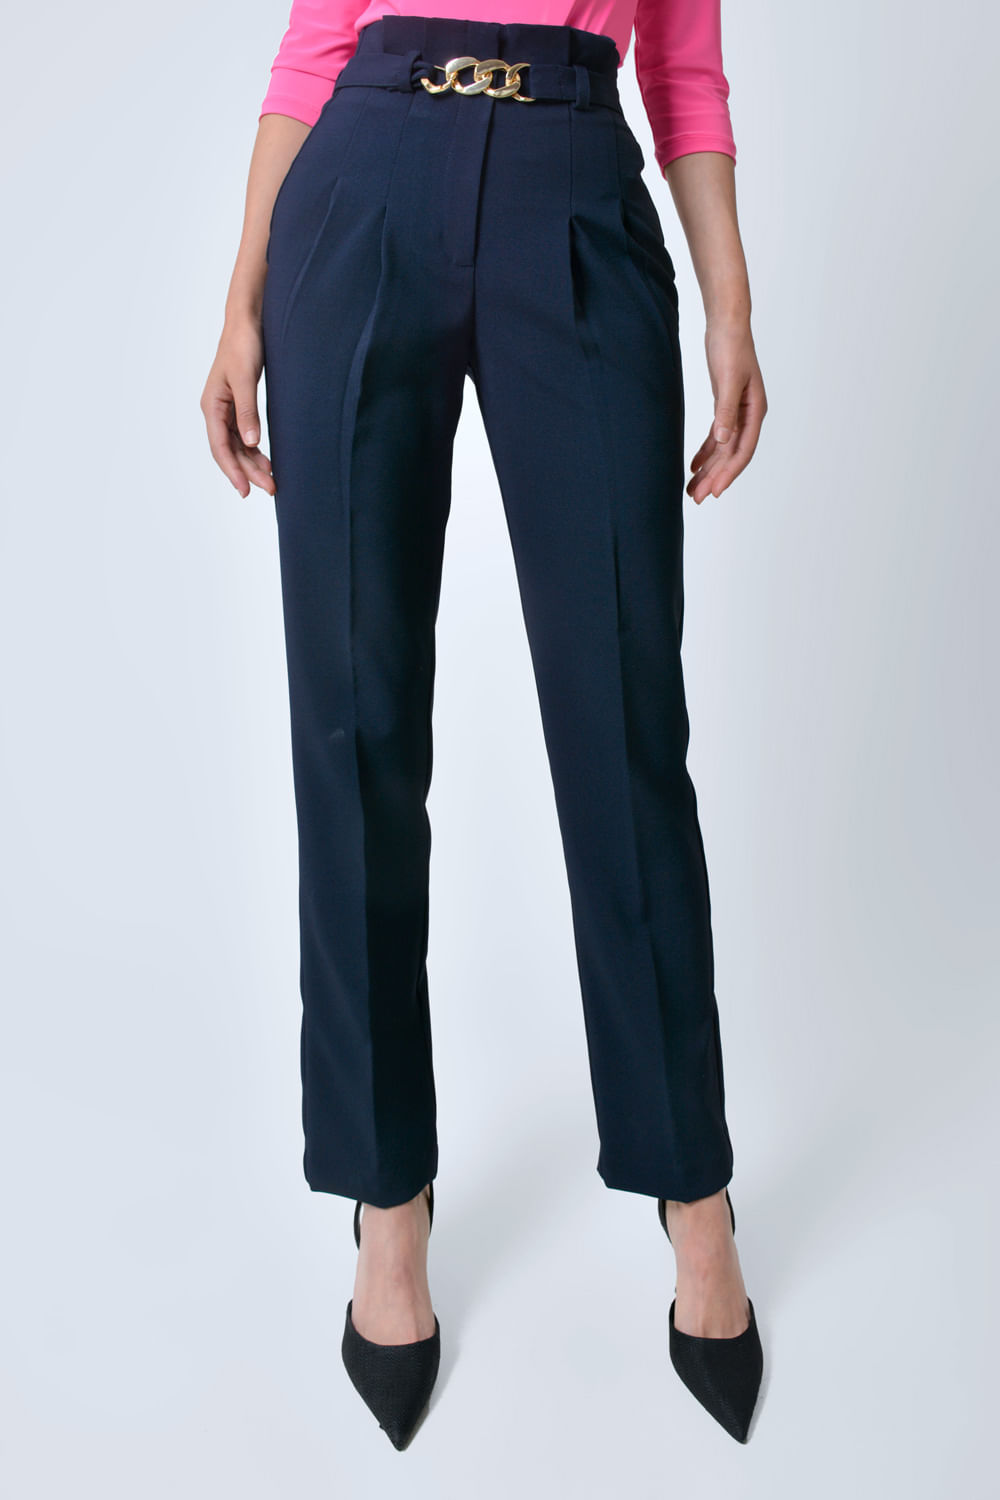 Pantalones clásicos azules con cinturón para mujer, pantalones de sastrería  para mujer, pantalones de cintura alta para mujer, pantalones Zatr 2023 -  AliExpress